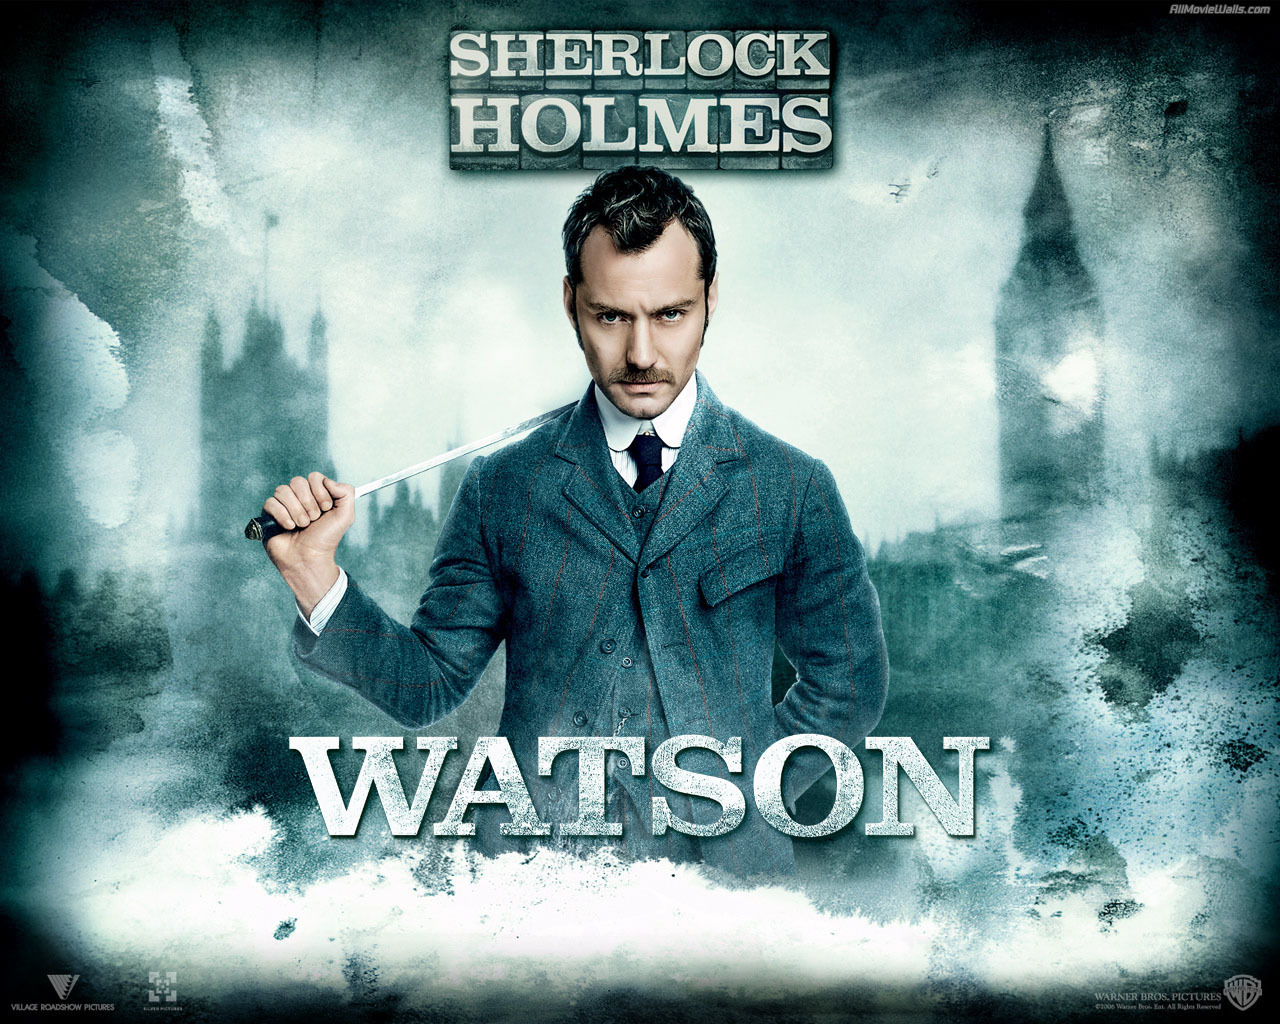 Sherlock Holmes in Washington movies in Australia